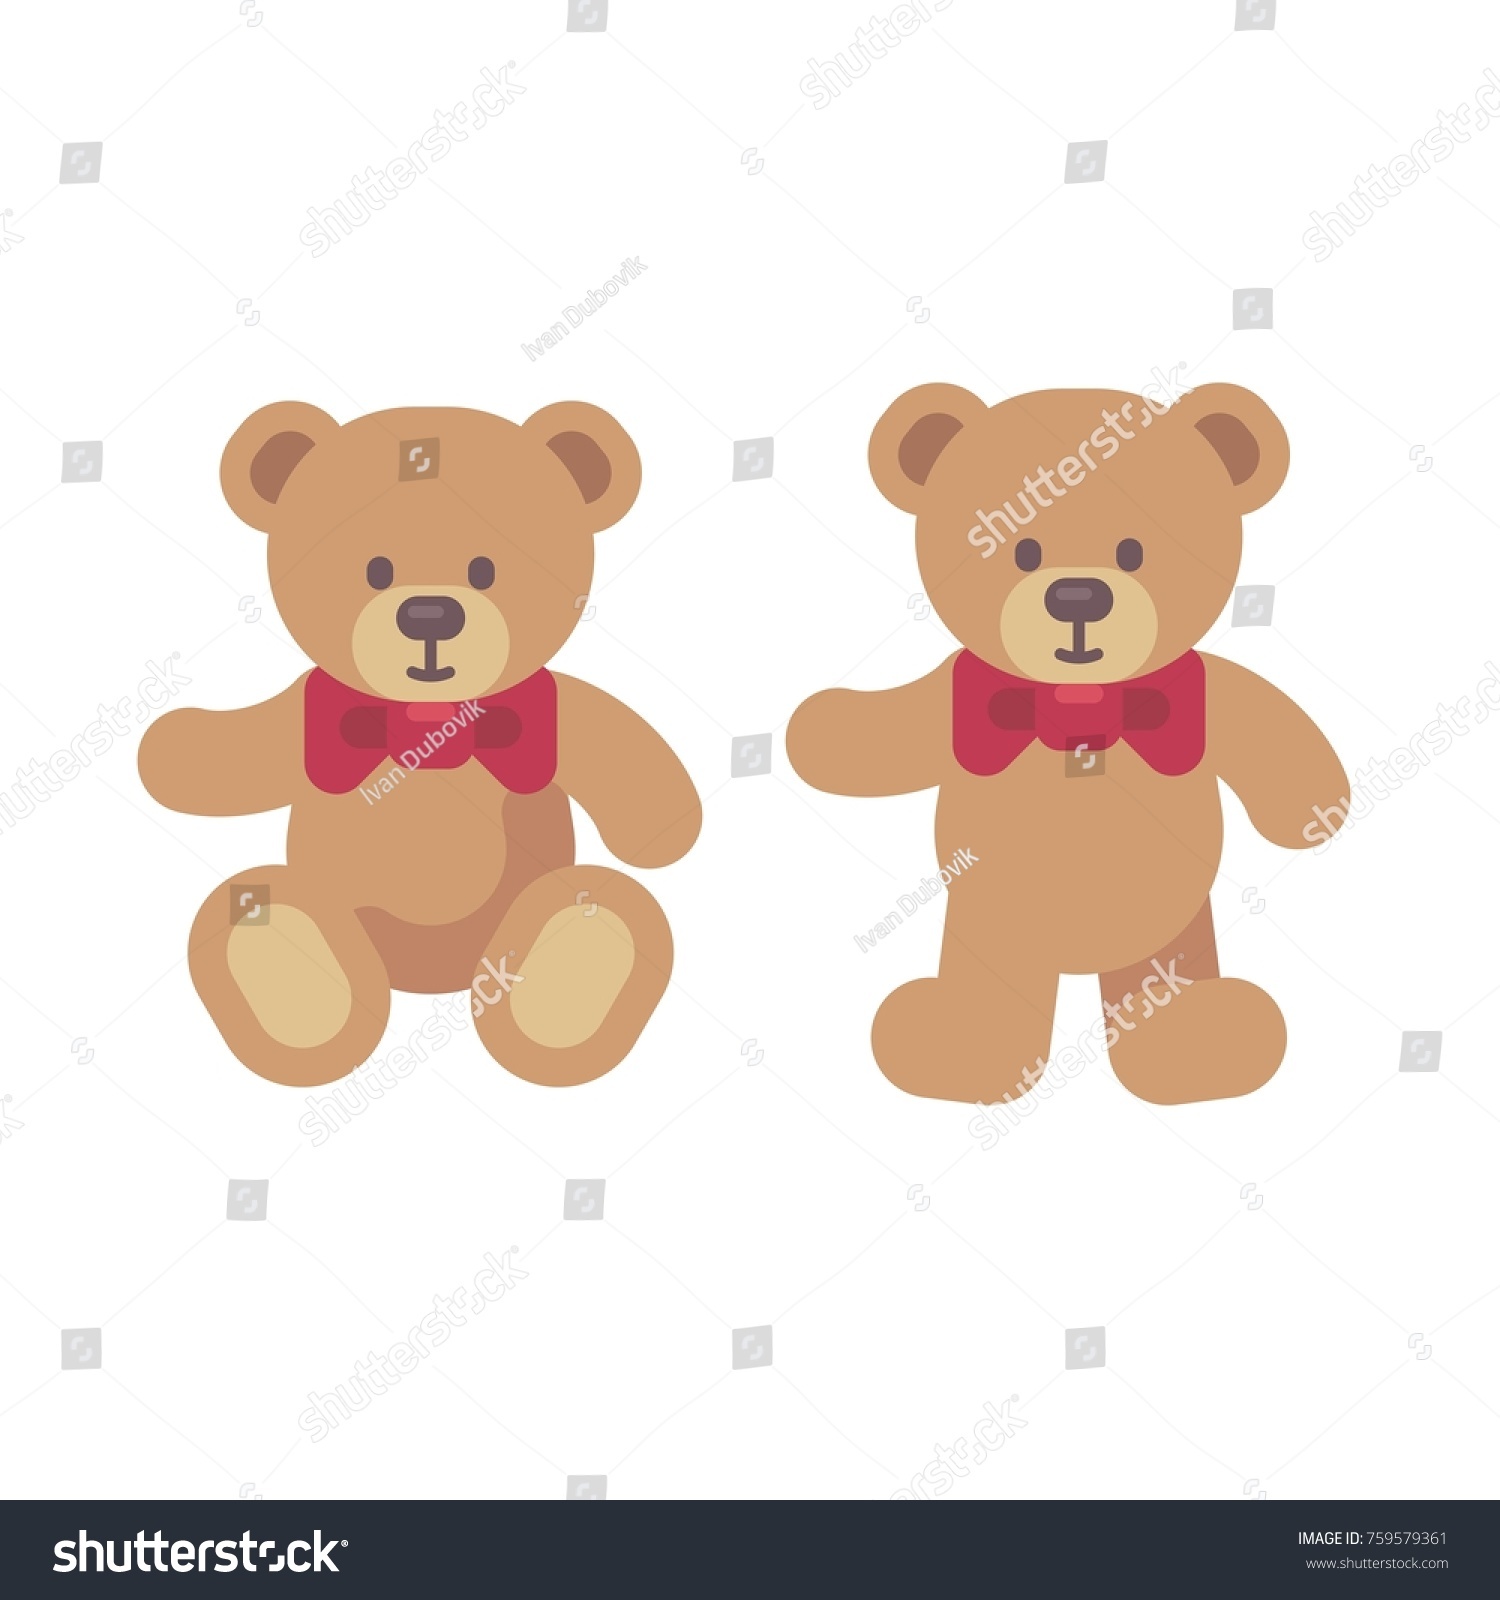 Teddy Bear Sitting Standing Flat Illustration Stock Vector HD ...